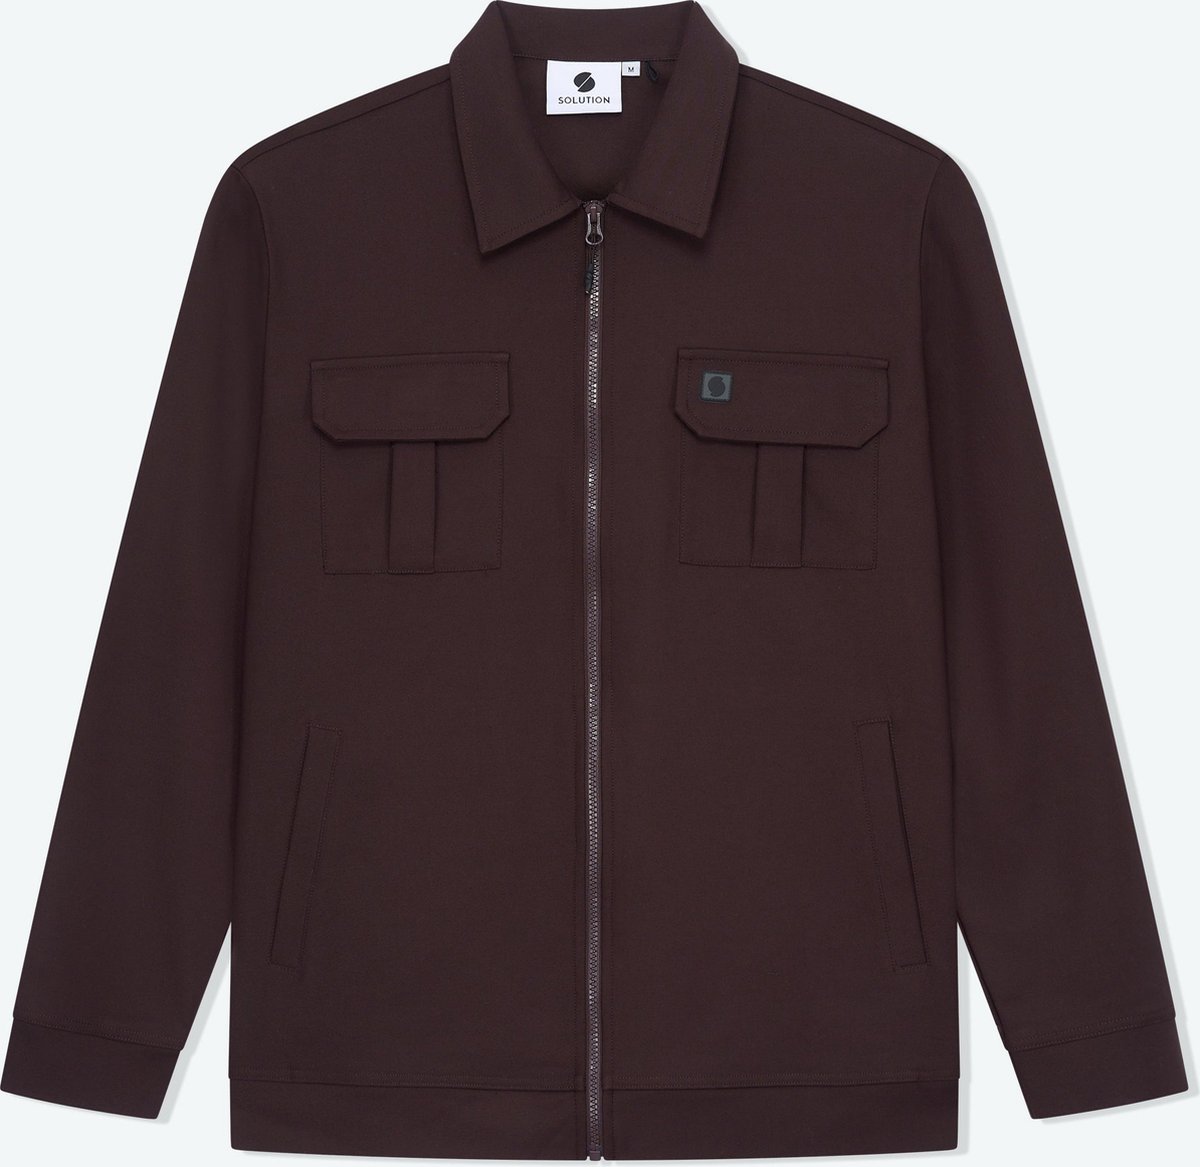 Solution Clothing Sjack - Overshirt - Overhemd - Regular Fit - Rits - Volwassenen - Heren - Mannen - Bruin - S - S - Solution Clothing